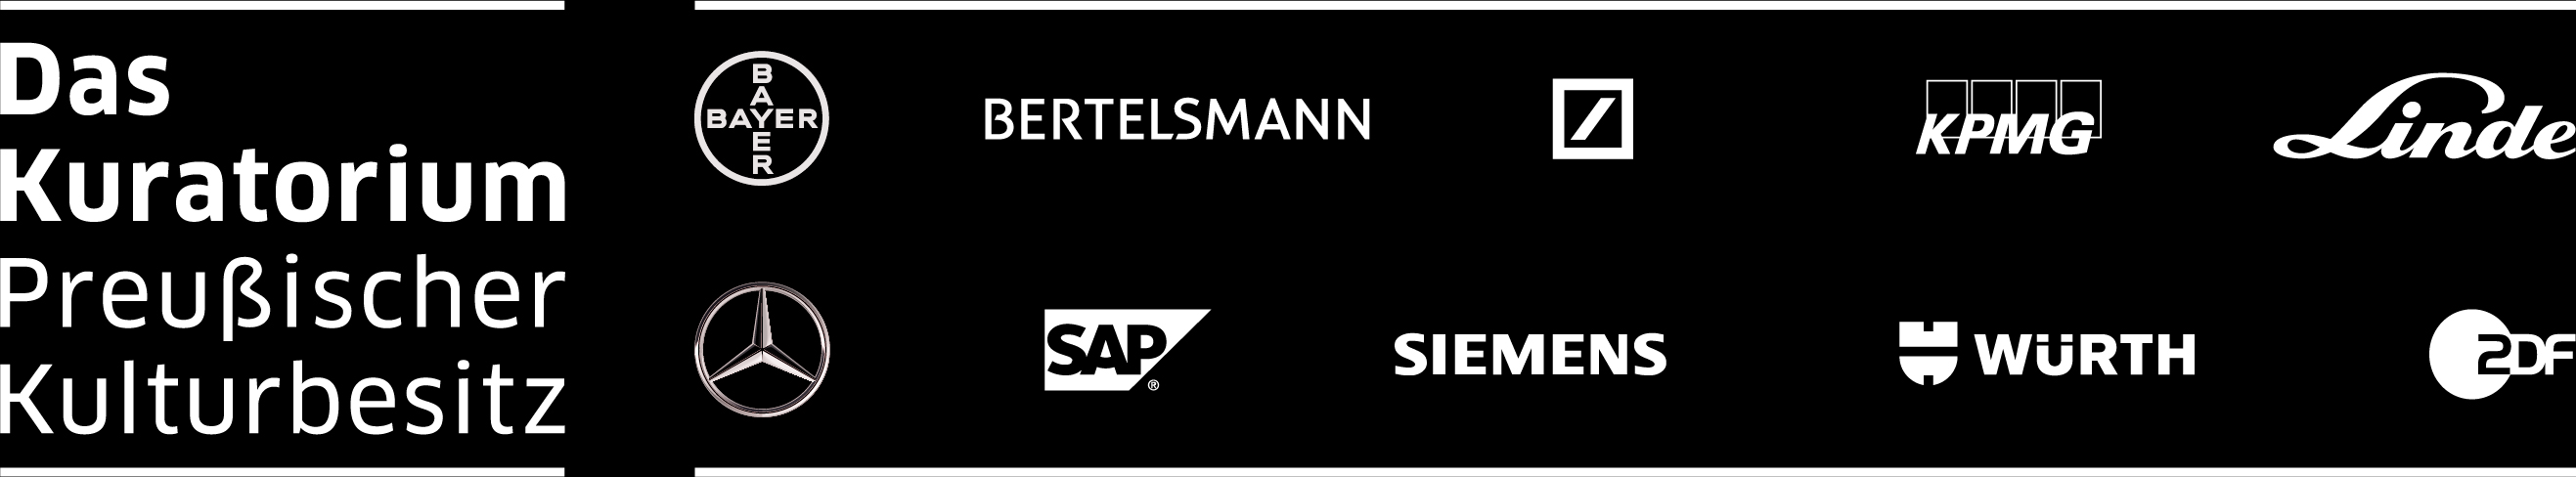 The Preußischer Kulturbesitz Advisory Board - Logos of participating companies: Bayer, Bertelsmann, Deutsche Bank, KPMG, Linde, Mercedes-Benz, SAP, Siemens, Würth & ZDF